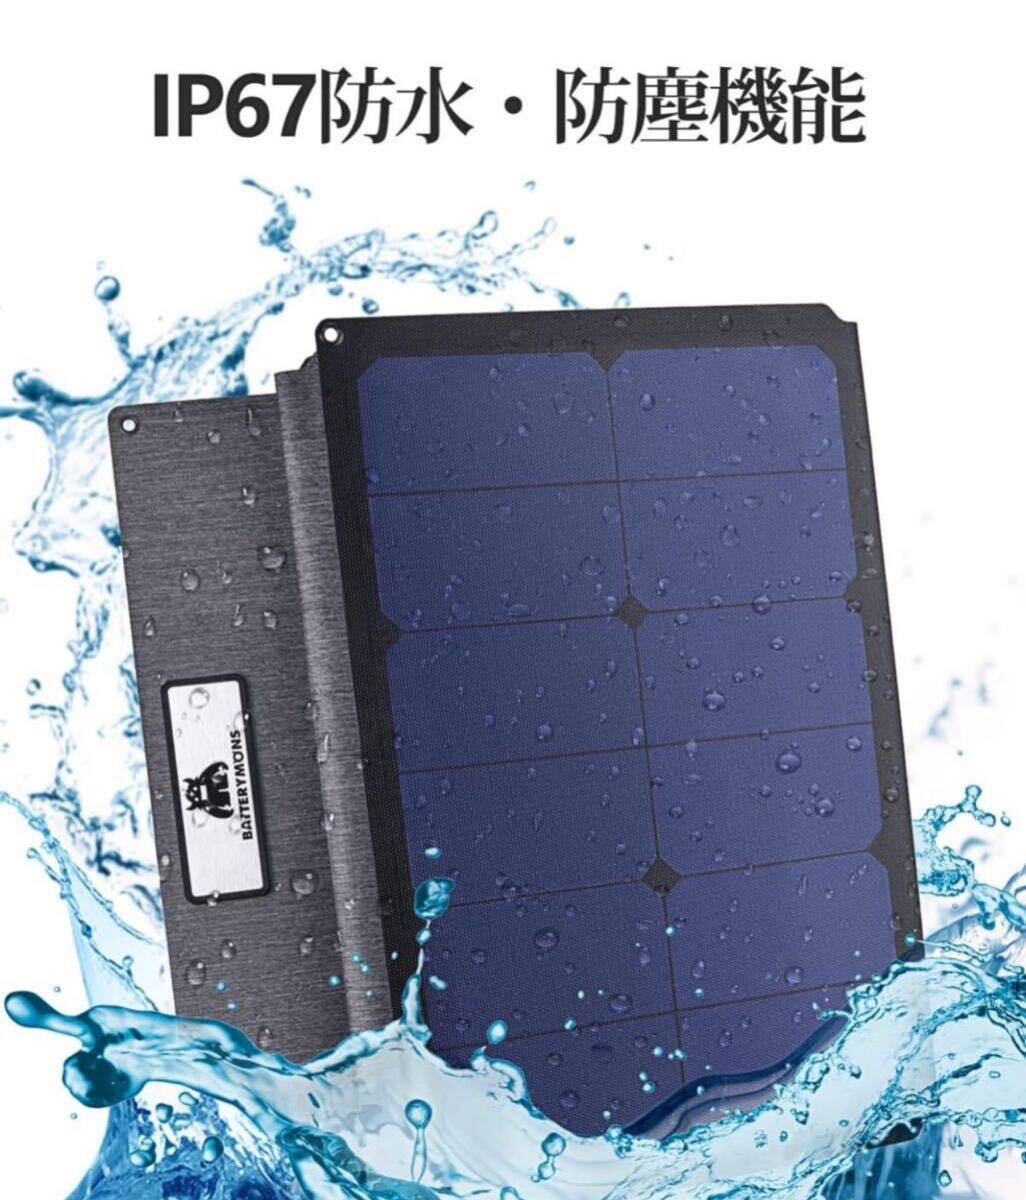 新品ソーラーパネル 140W 単結晶26.4V 5.3A 高変換効率 耐摩耗設計 防塵・防水IP67/超薄型 軽量 の画像5